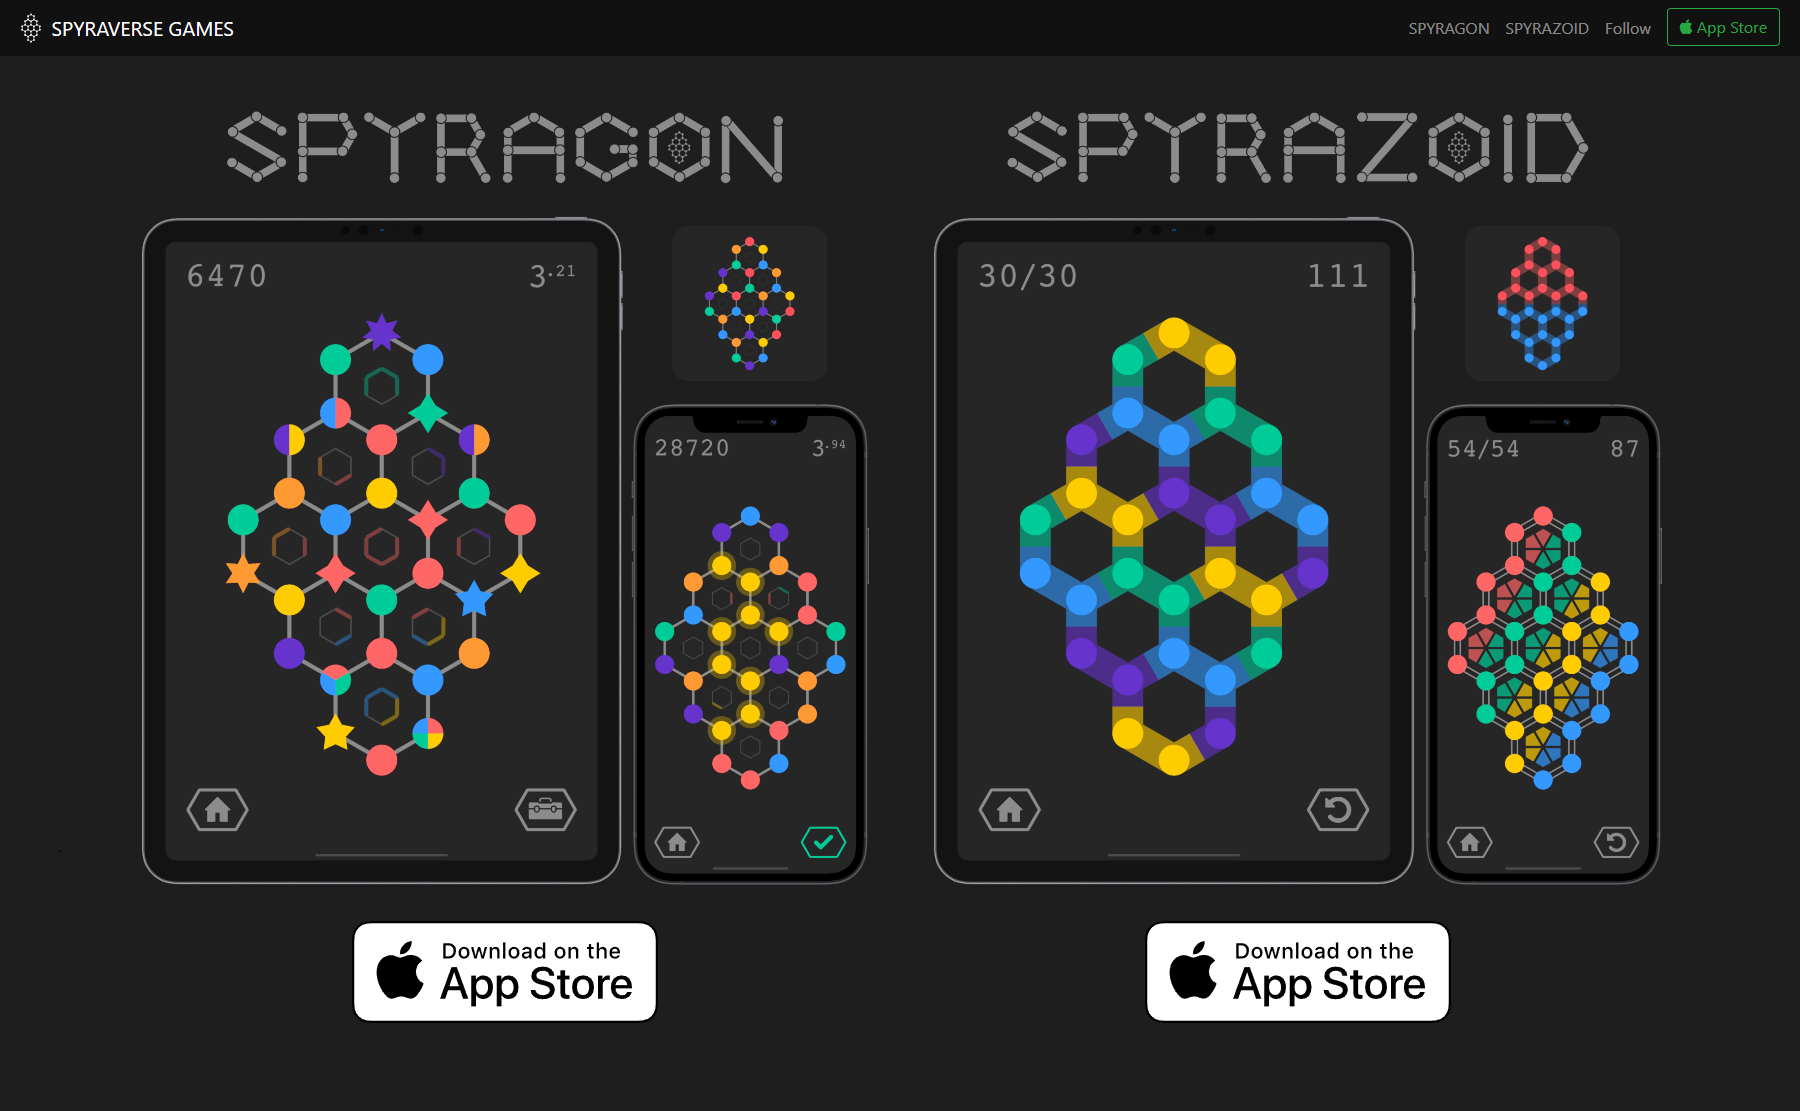 Spyraverse Games: Spyragon and Spyrazoid